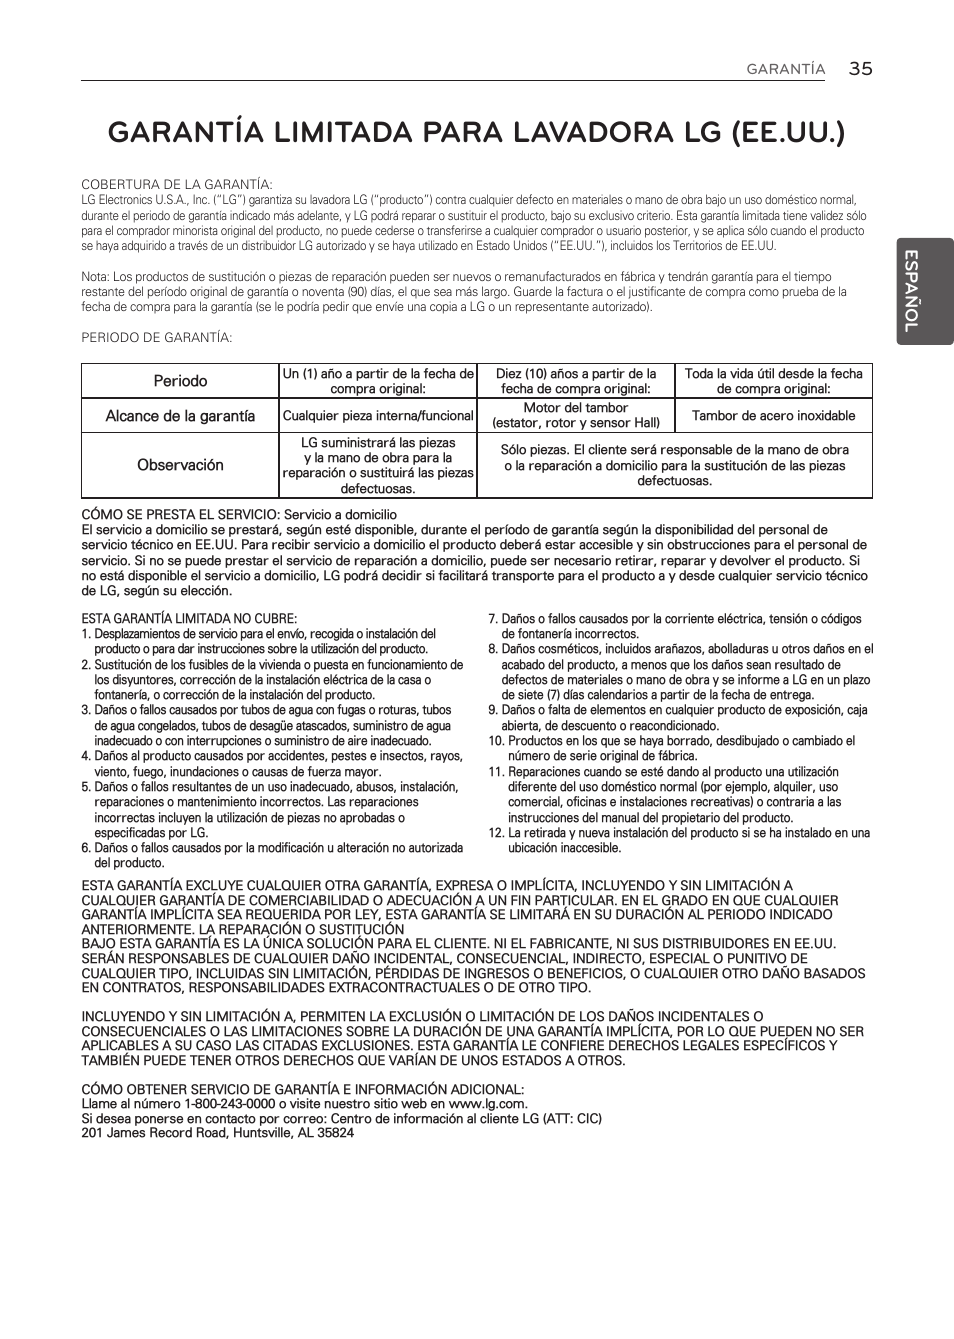 Garantía limitada para lavadora lg (ee.uu.), Esp añol | LG WT1001CW User  Manual | Page 71 / 72 | Original mode